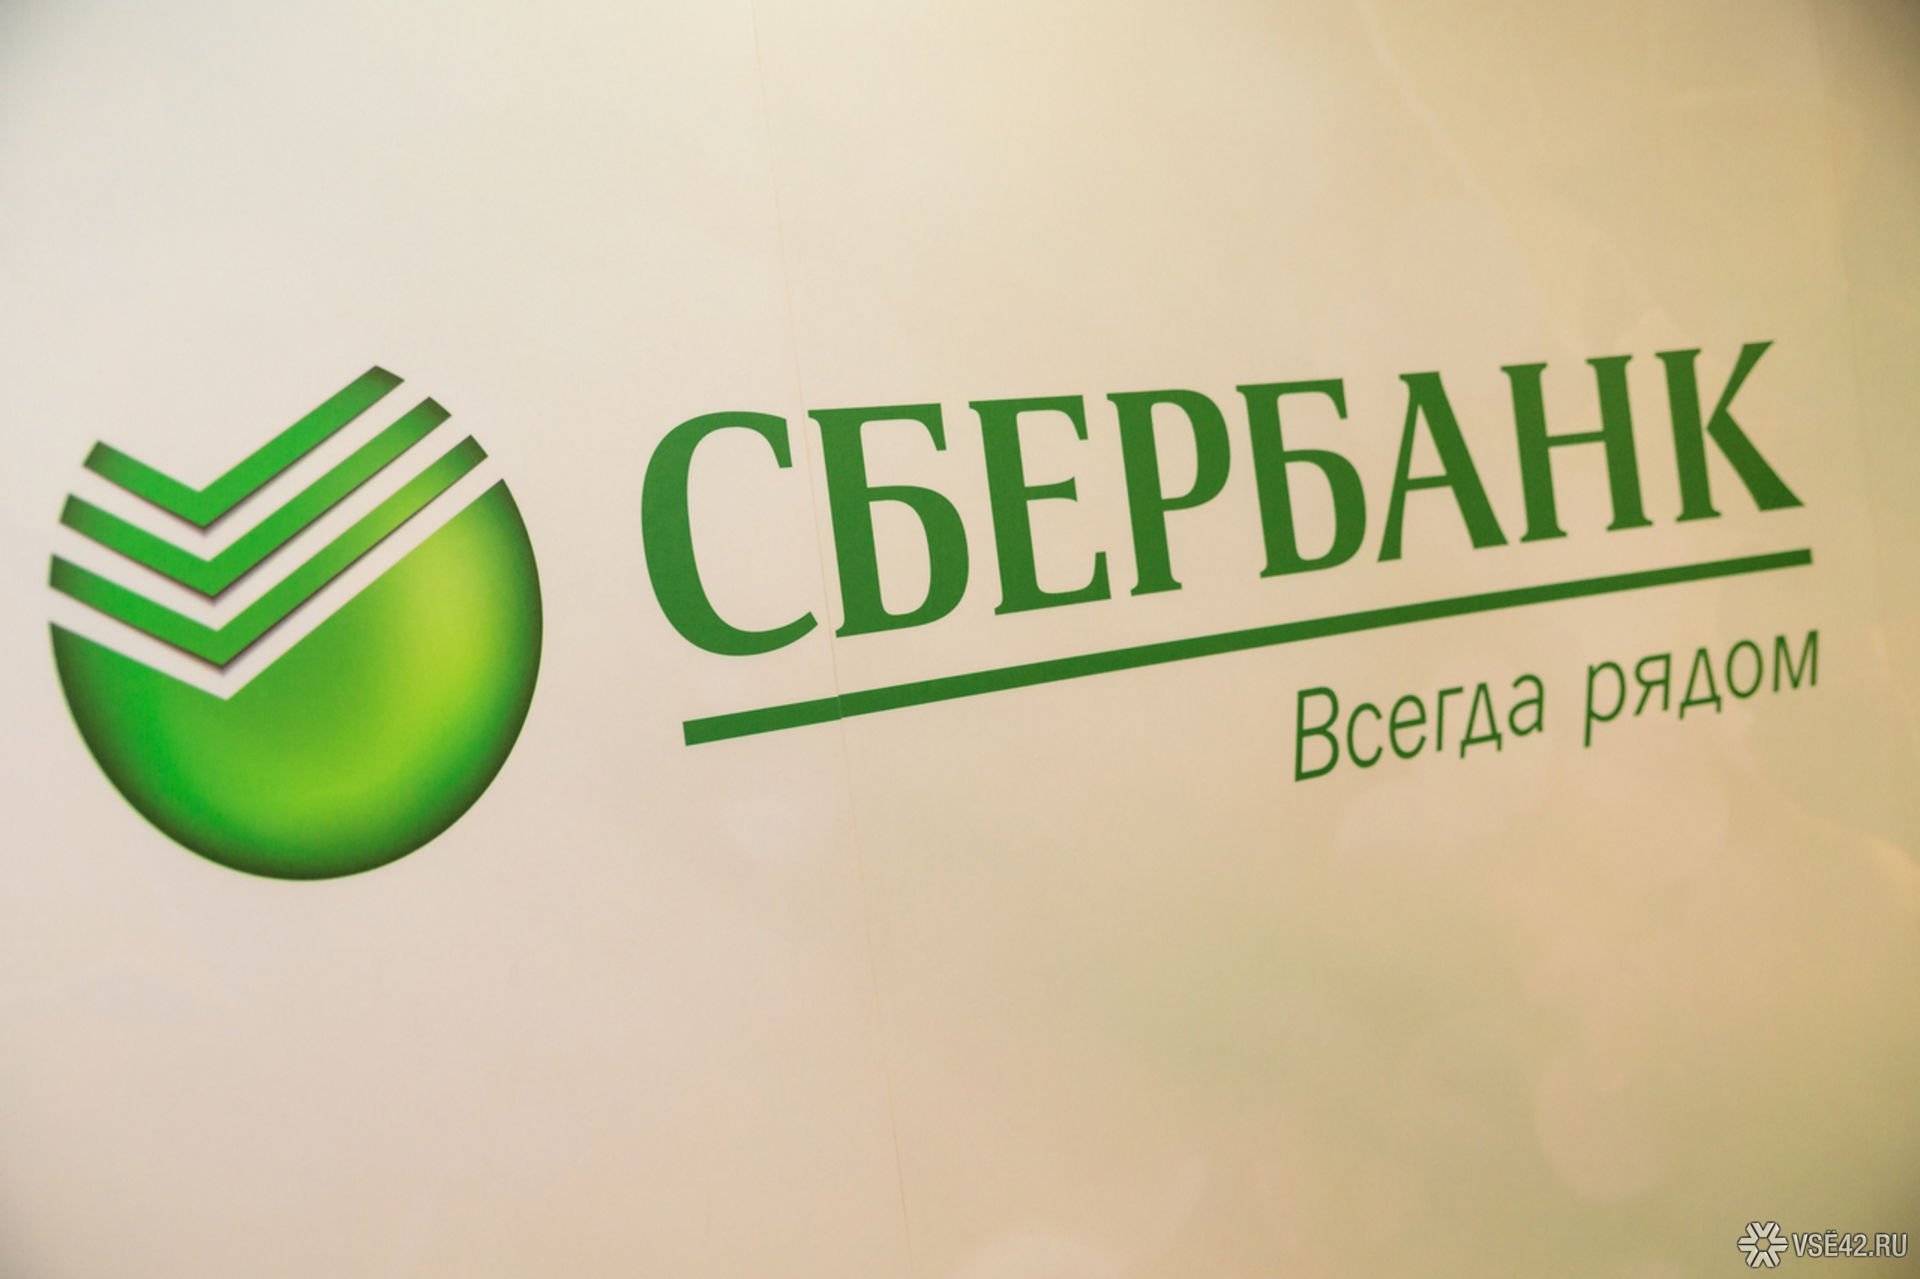 Sberbank type